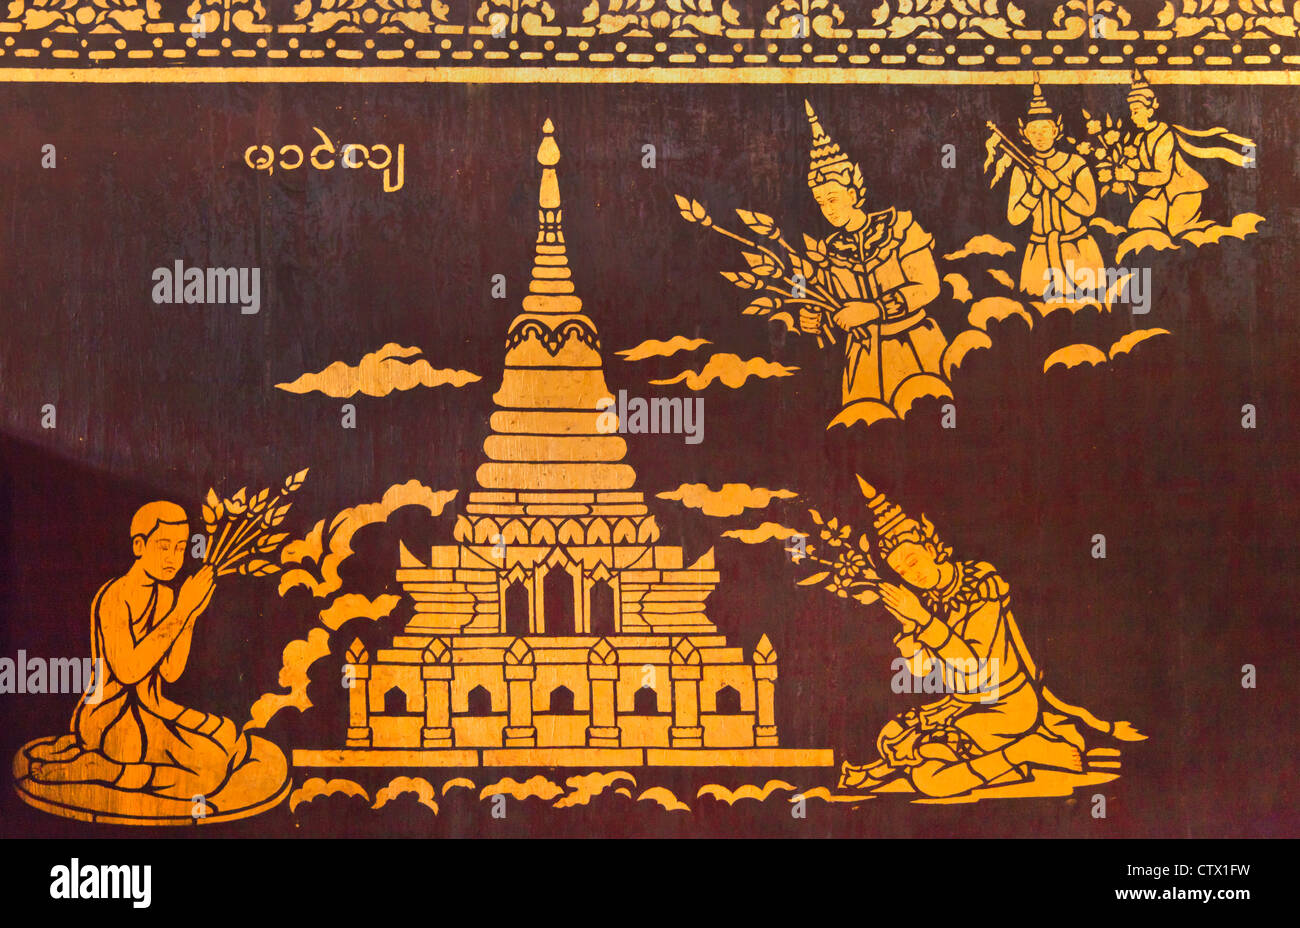 Schablone Gemälde im WAT JONG KHAM stammende mindestens dem 13. Jahrhundert - KENGTUNG auch bekannt als KYAINGTONG, MYANMAR Stockfoto